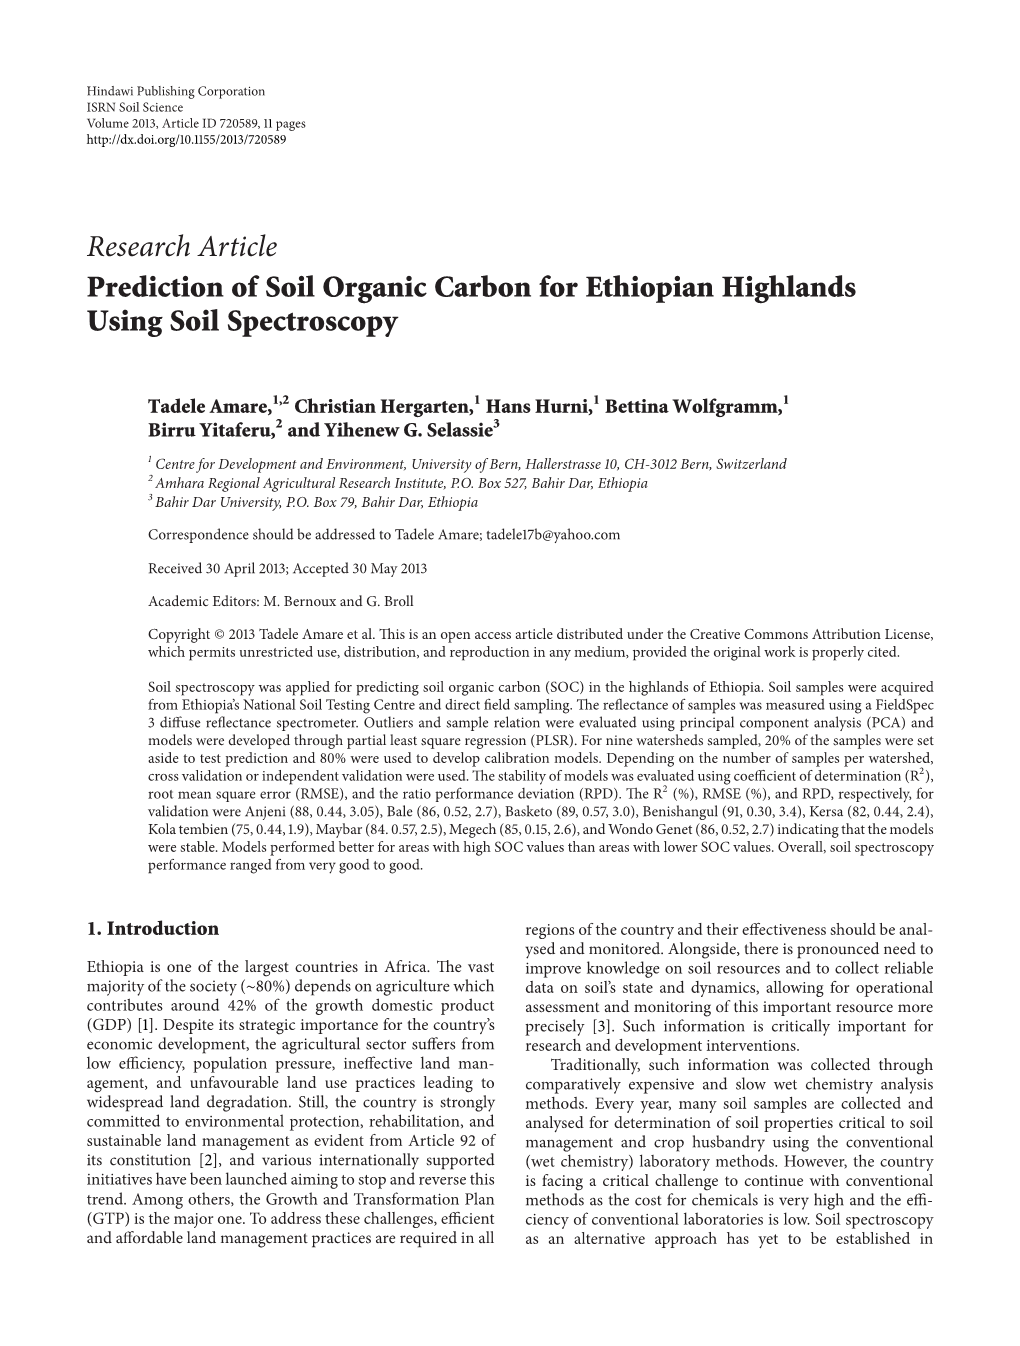 Prediction of Soil Organic Carbon for Ethiopian Highlands Using Soil Spectroscopy